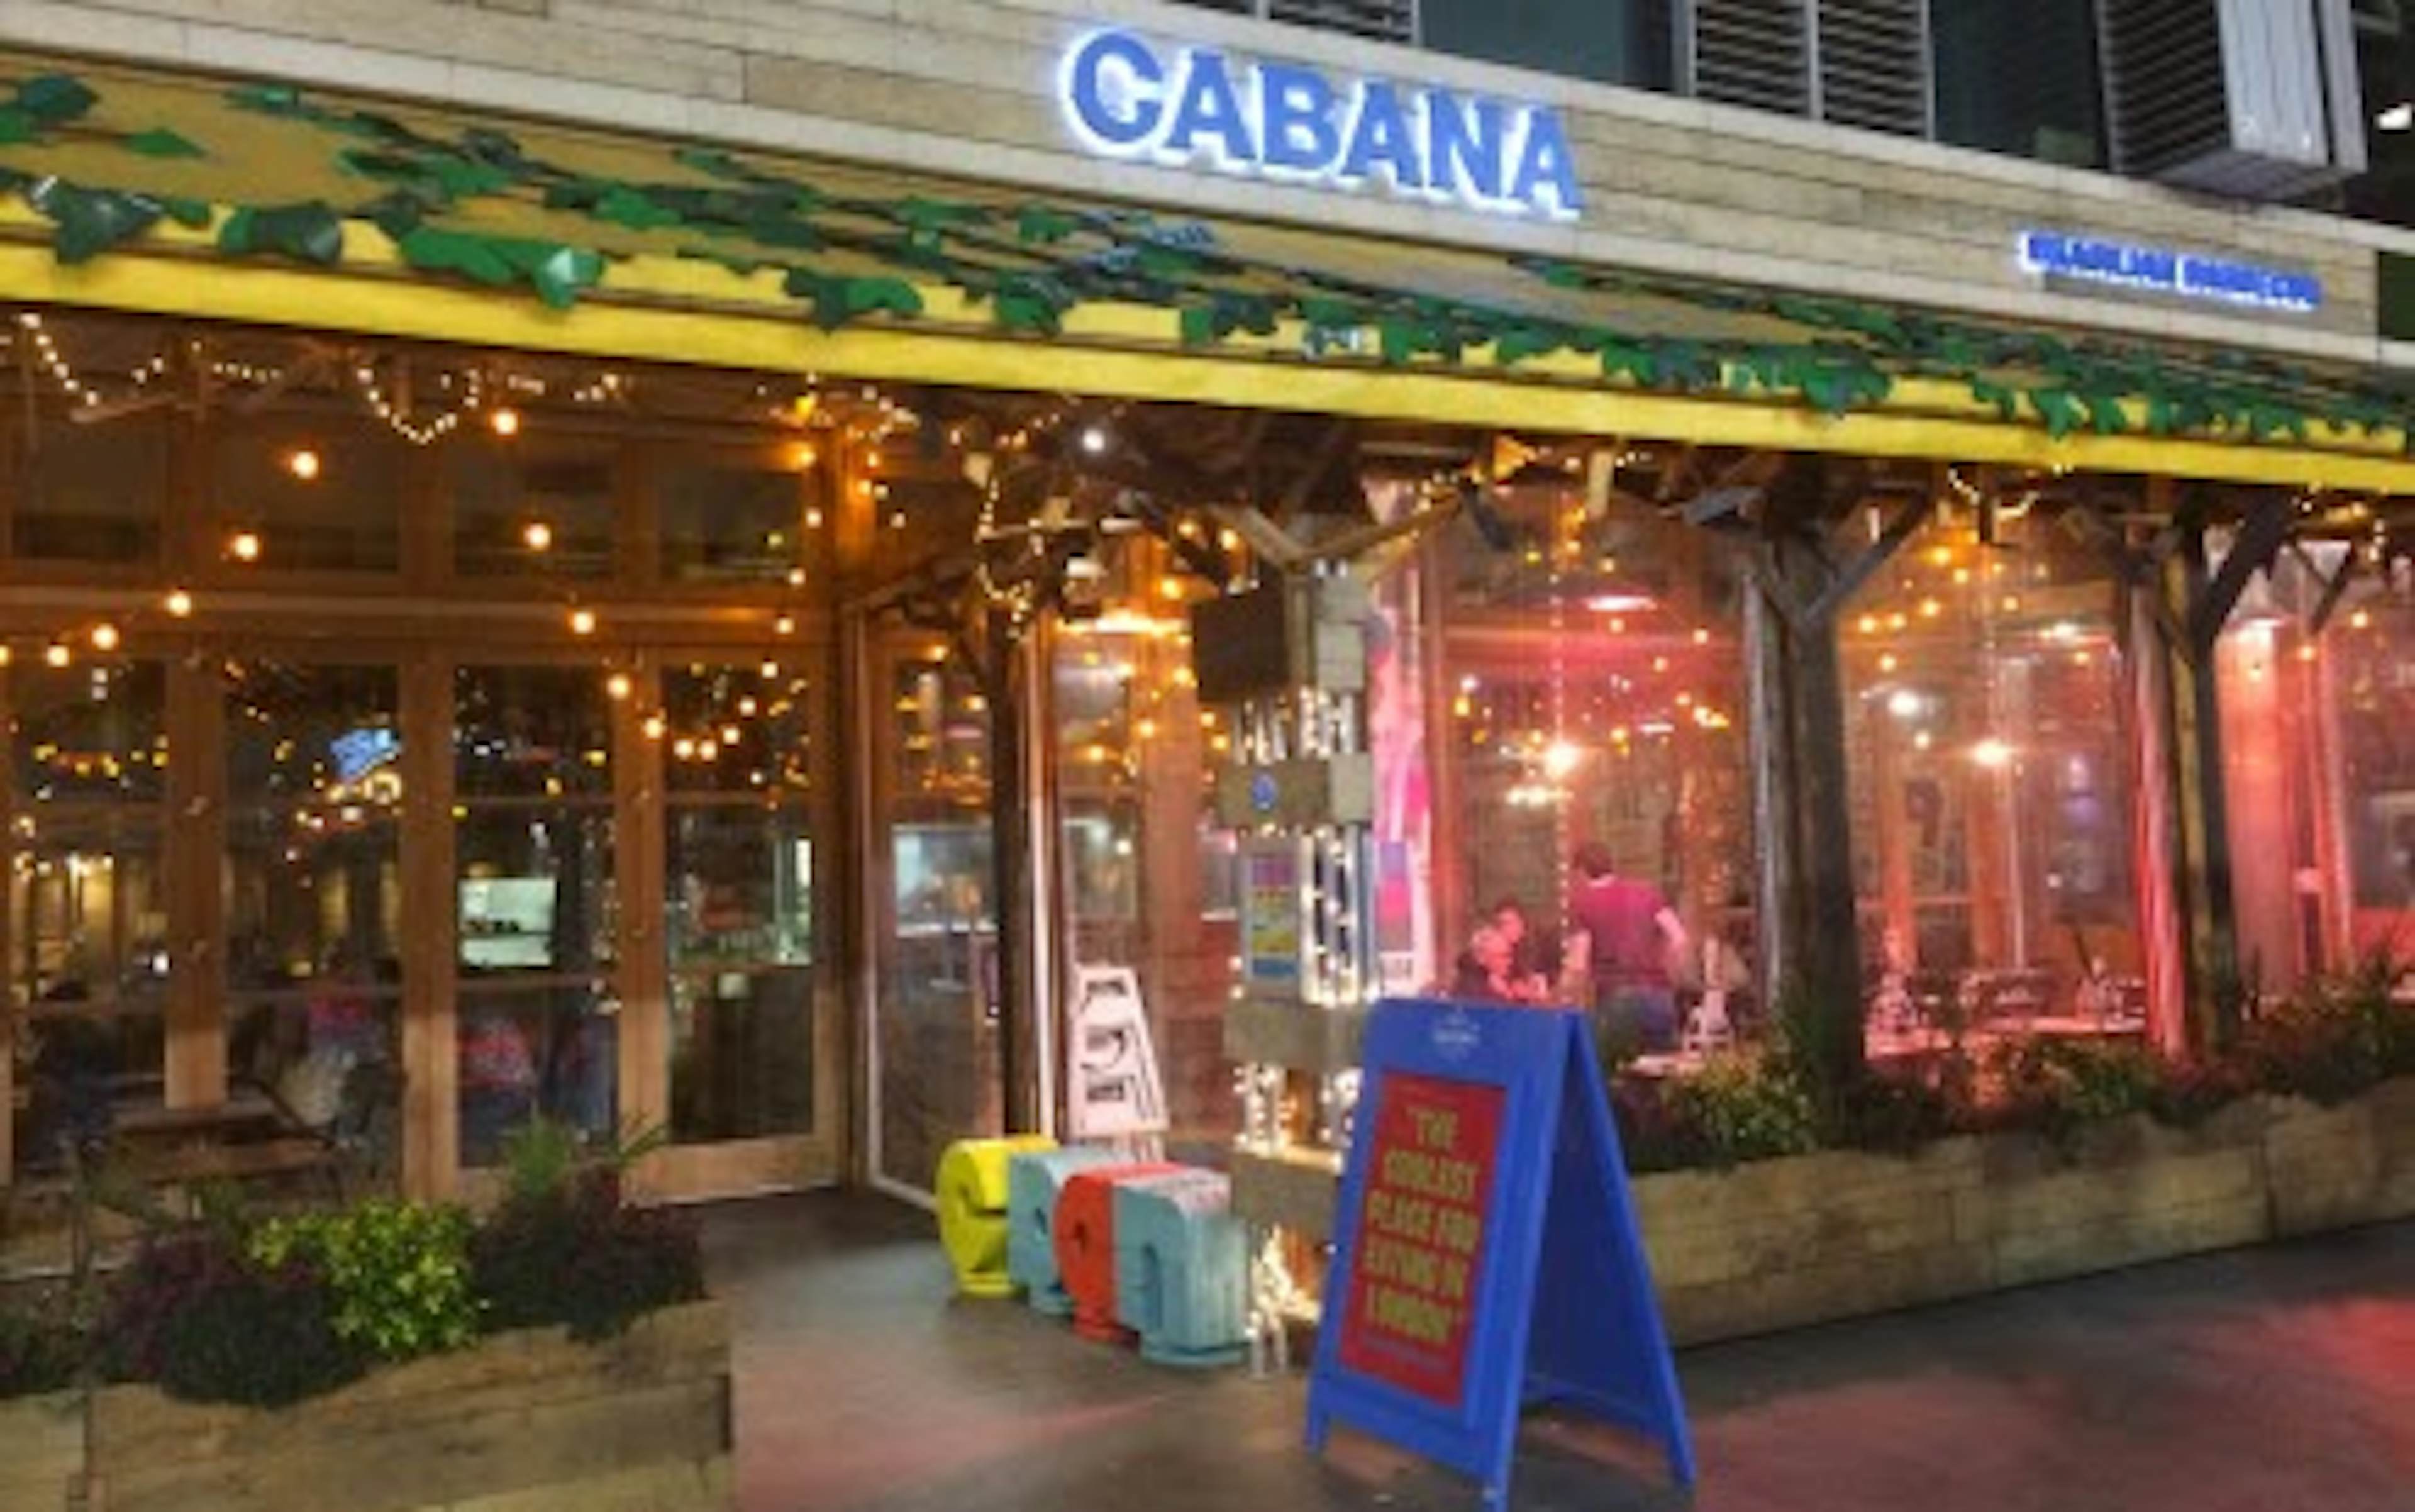 Cabana Stratford - The Rio Restaurant image 1